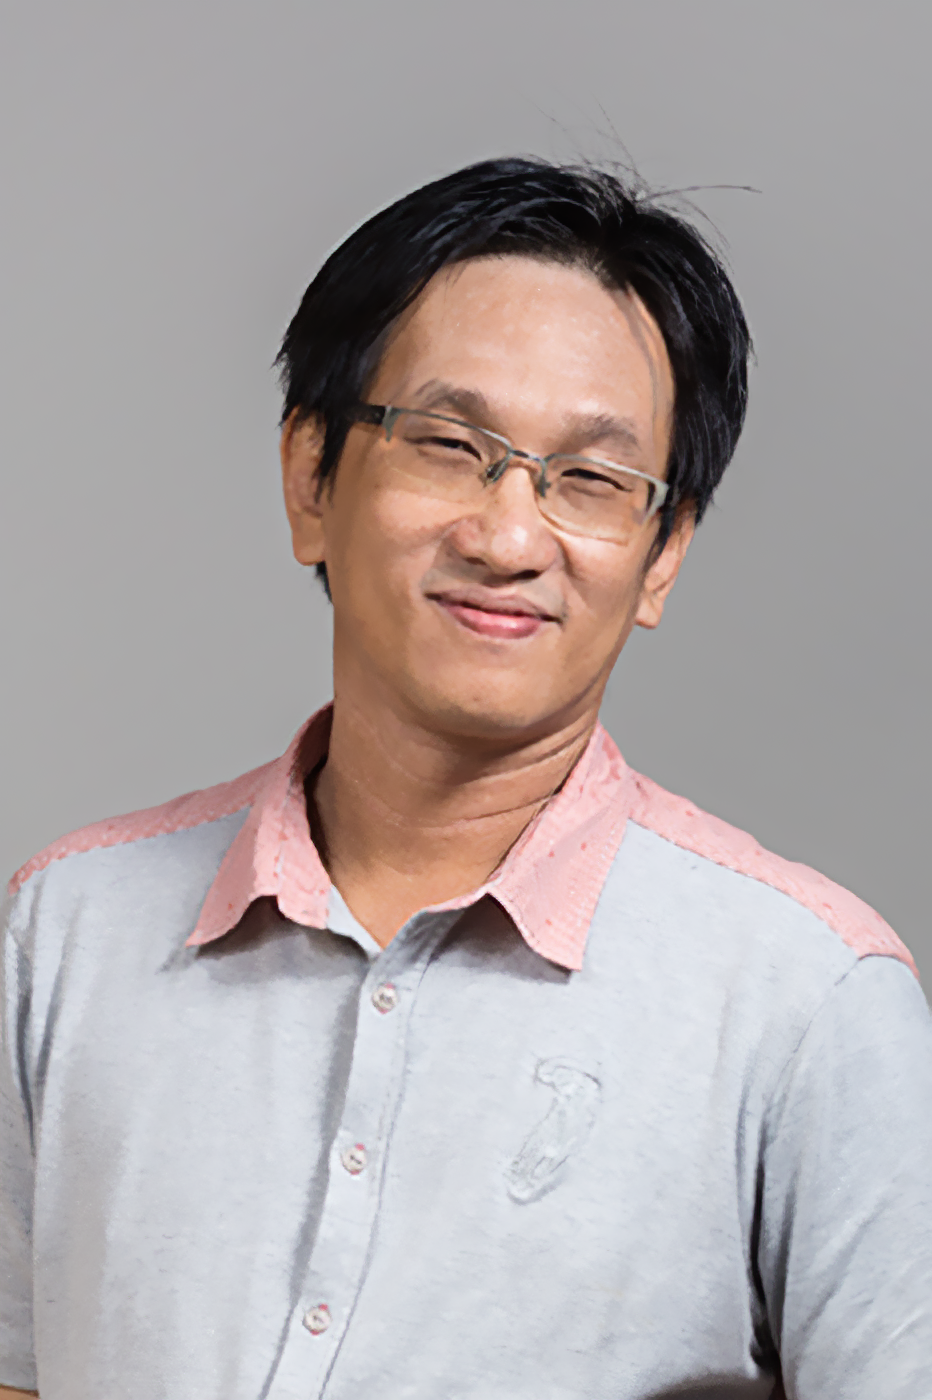 Prof. Anthony Tung's portrait